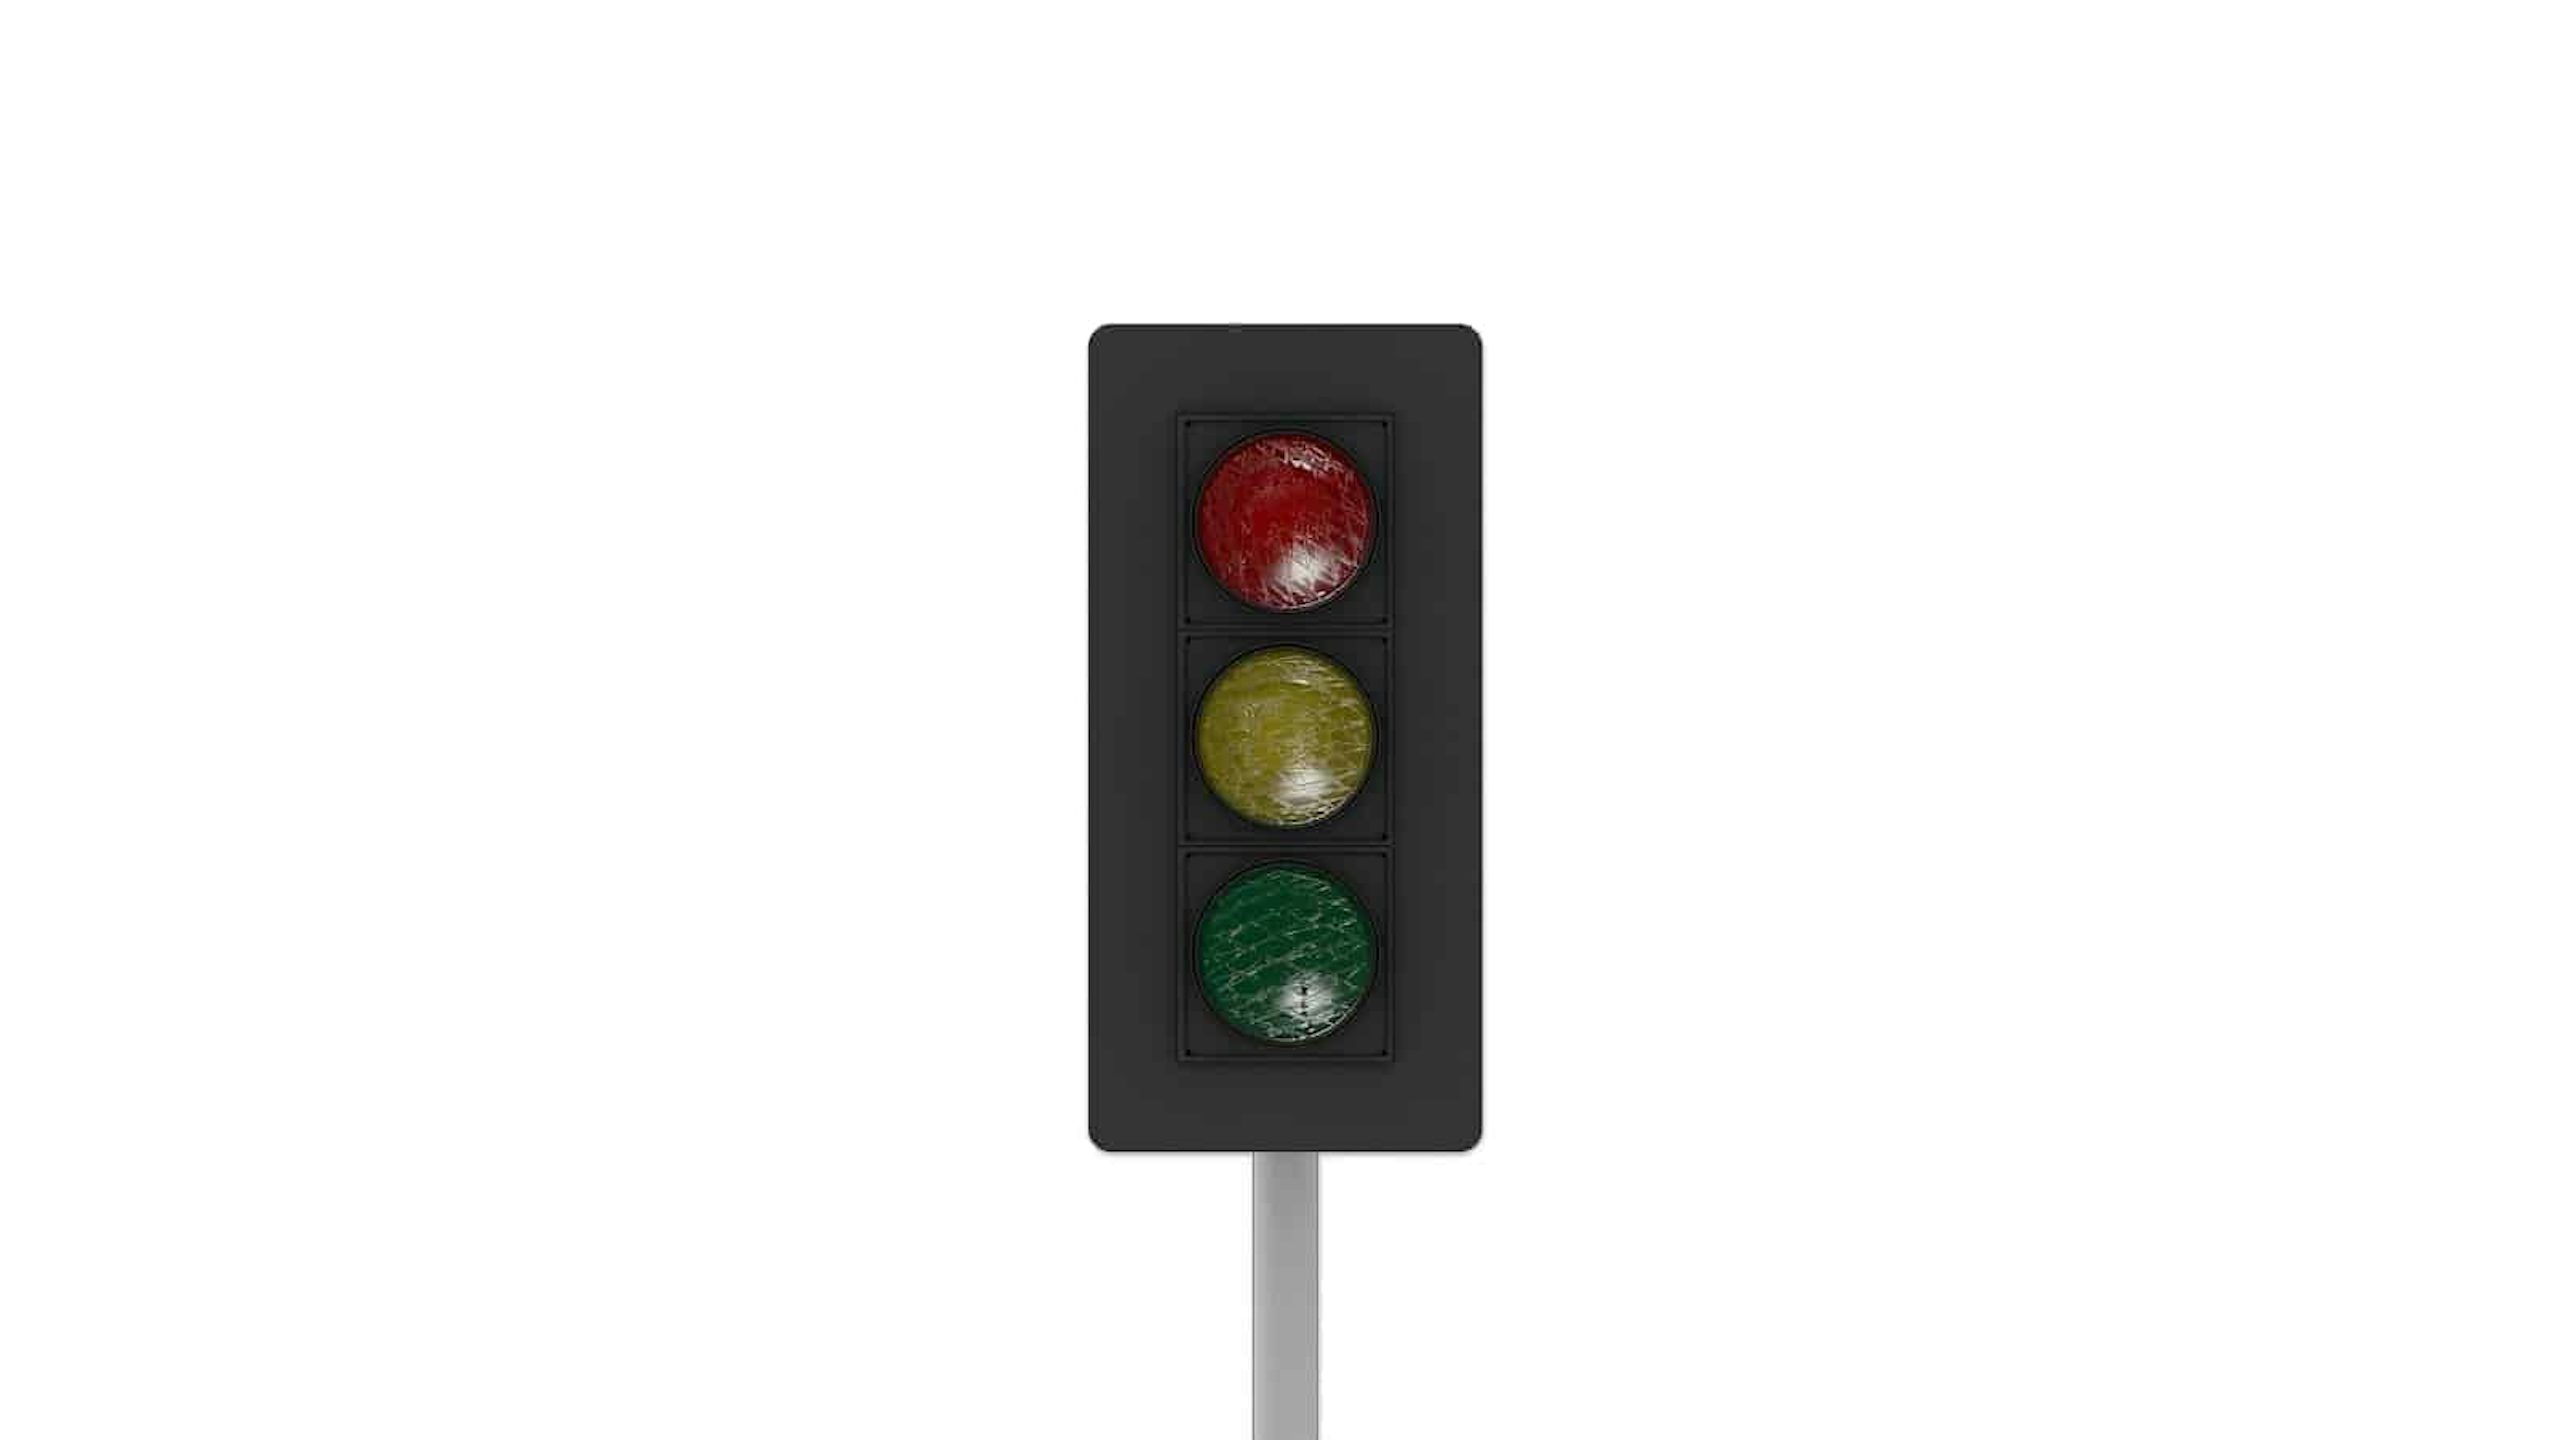 red light green light signs